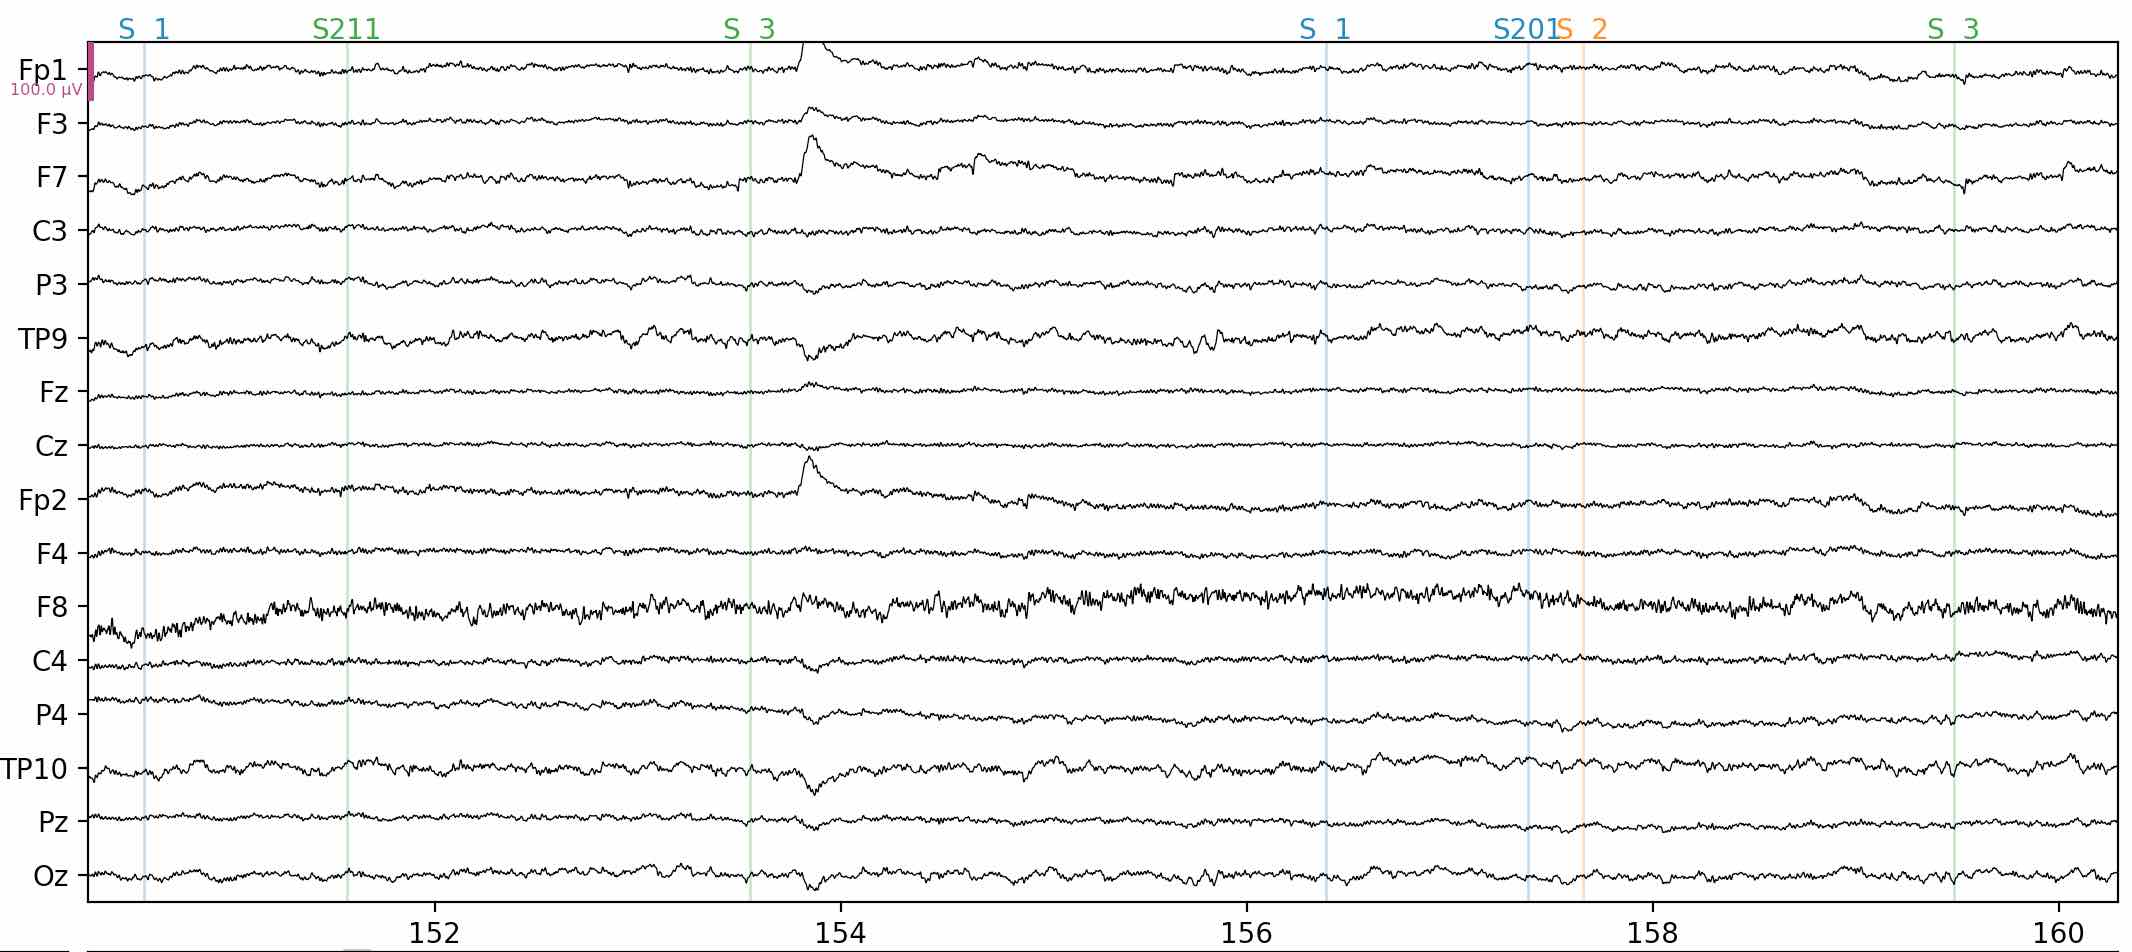 Sample EEG data